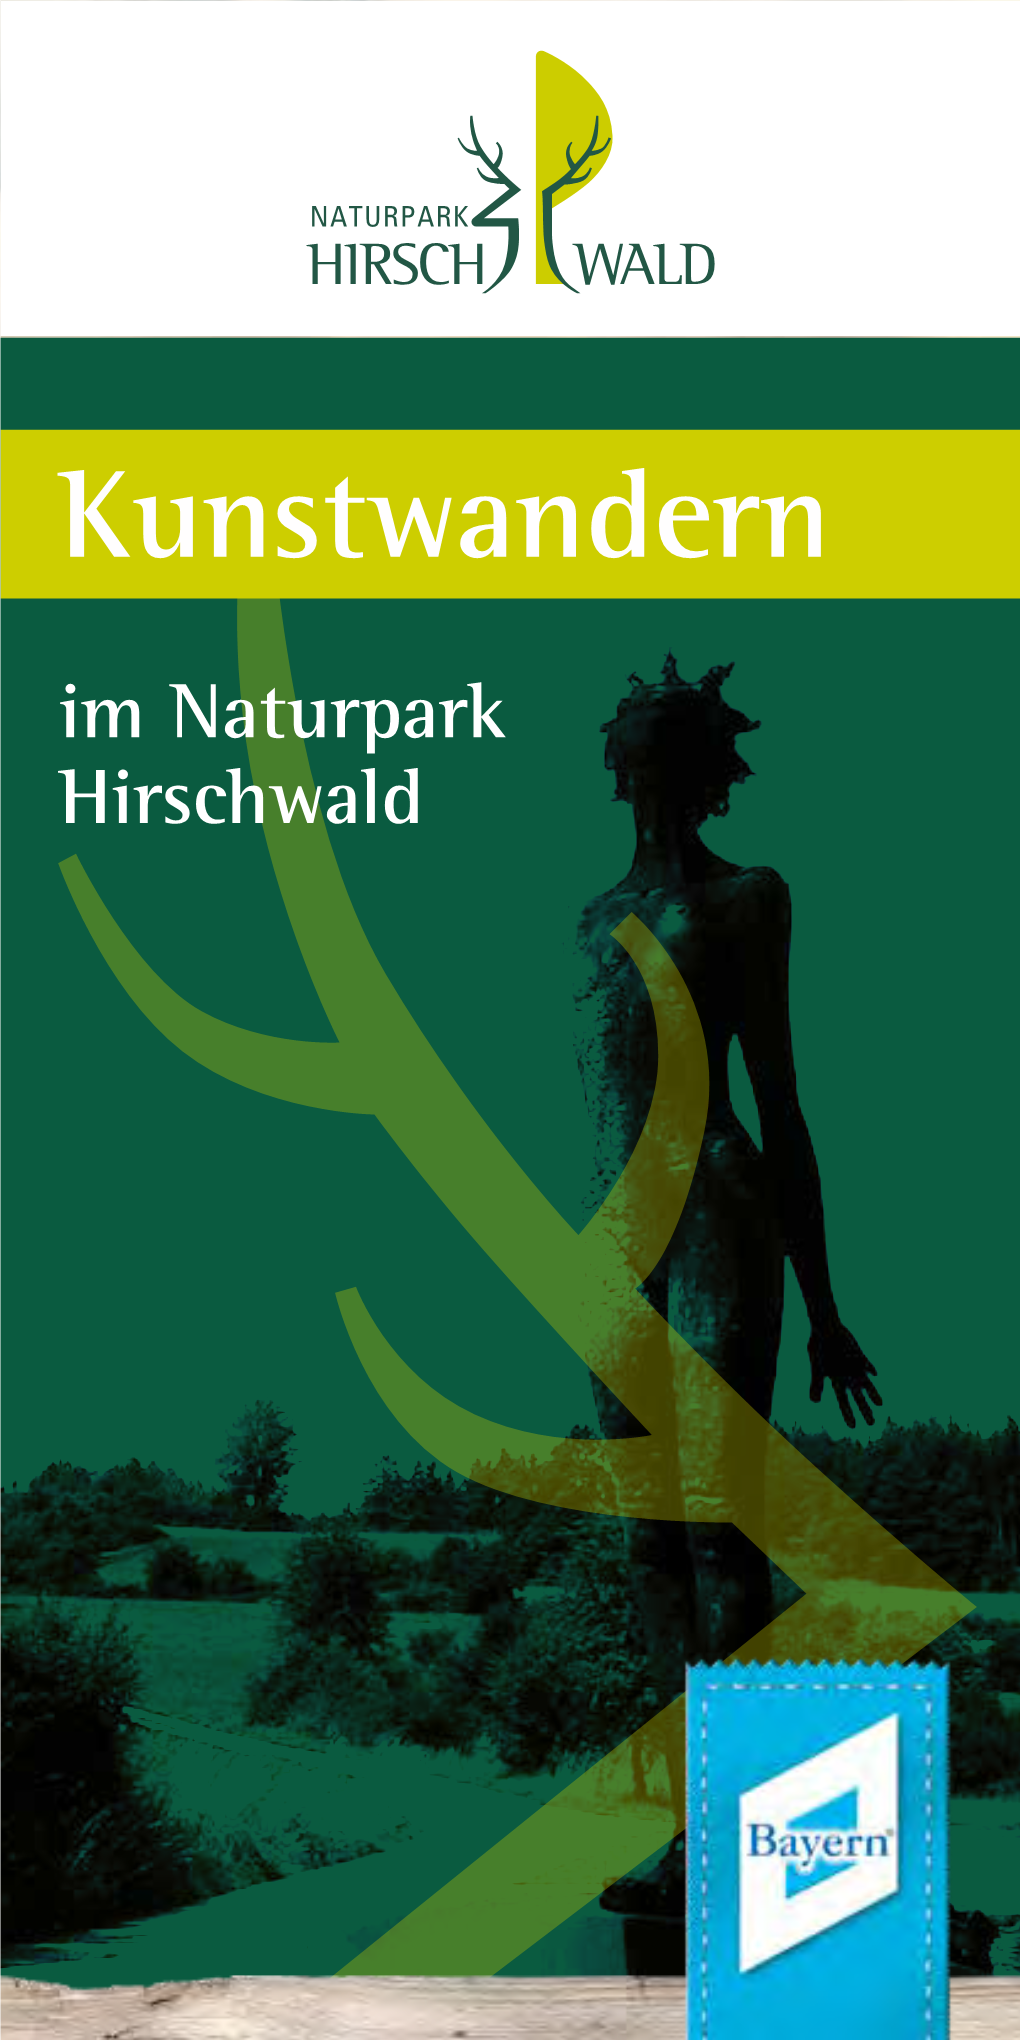 Kunstwandern in Naturpark Hirschwald